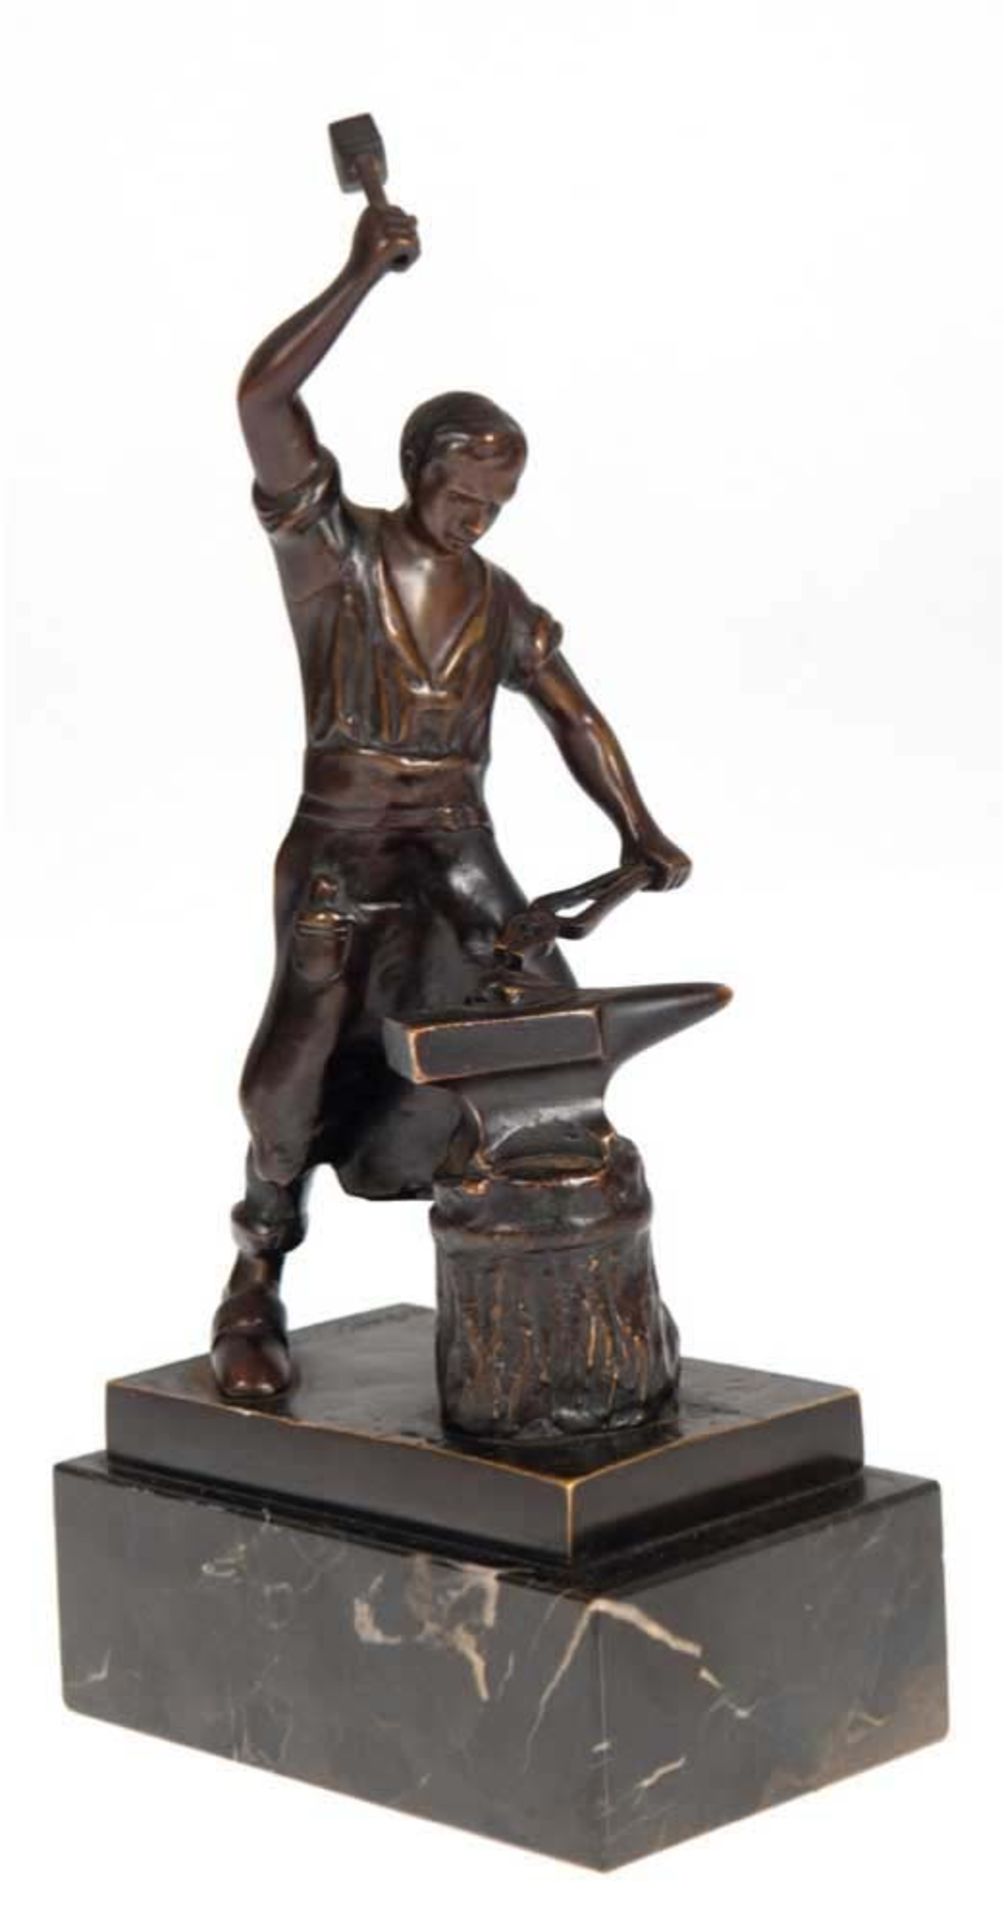 Schmidt-Felling, Julius (ca. 1835-1920) "Schmied am Amboss stehend", Bronze, braun patiniert, signi